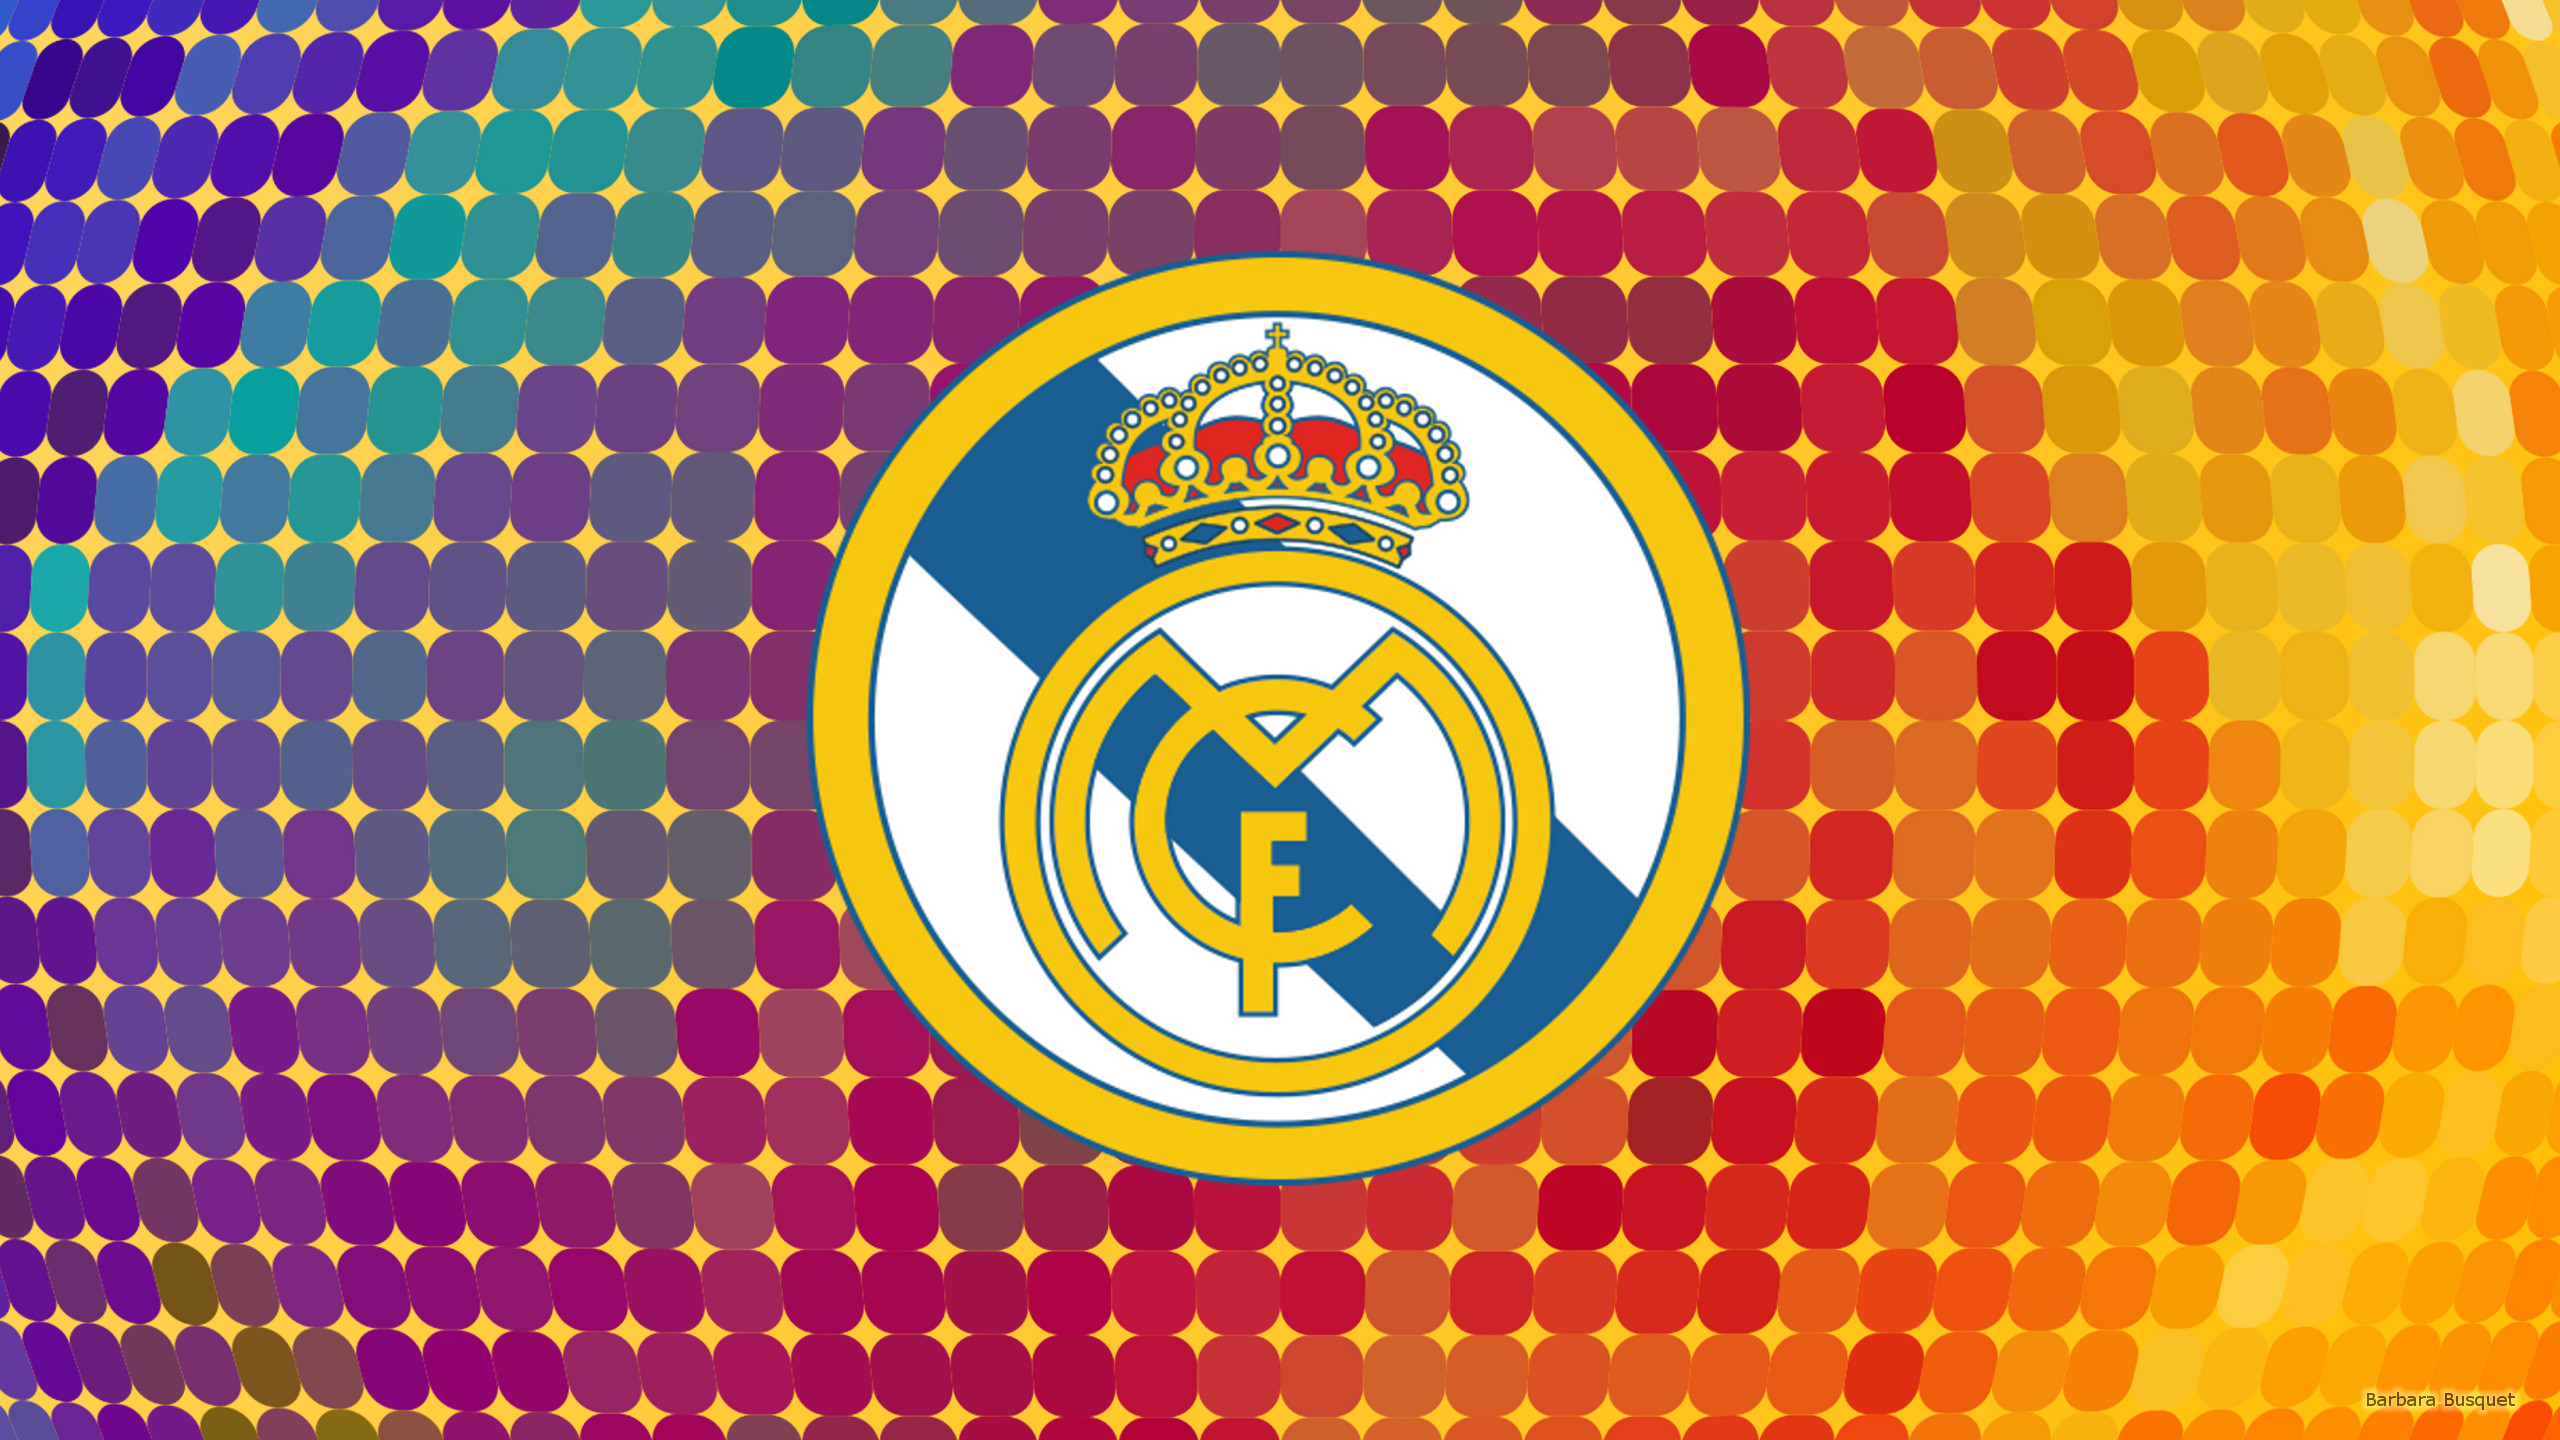 Реал Мадрид эмблема клуба